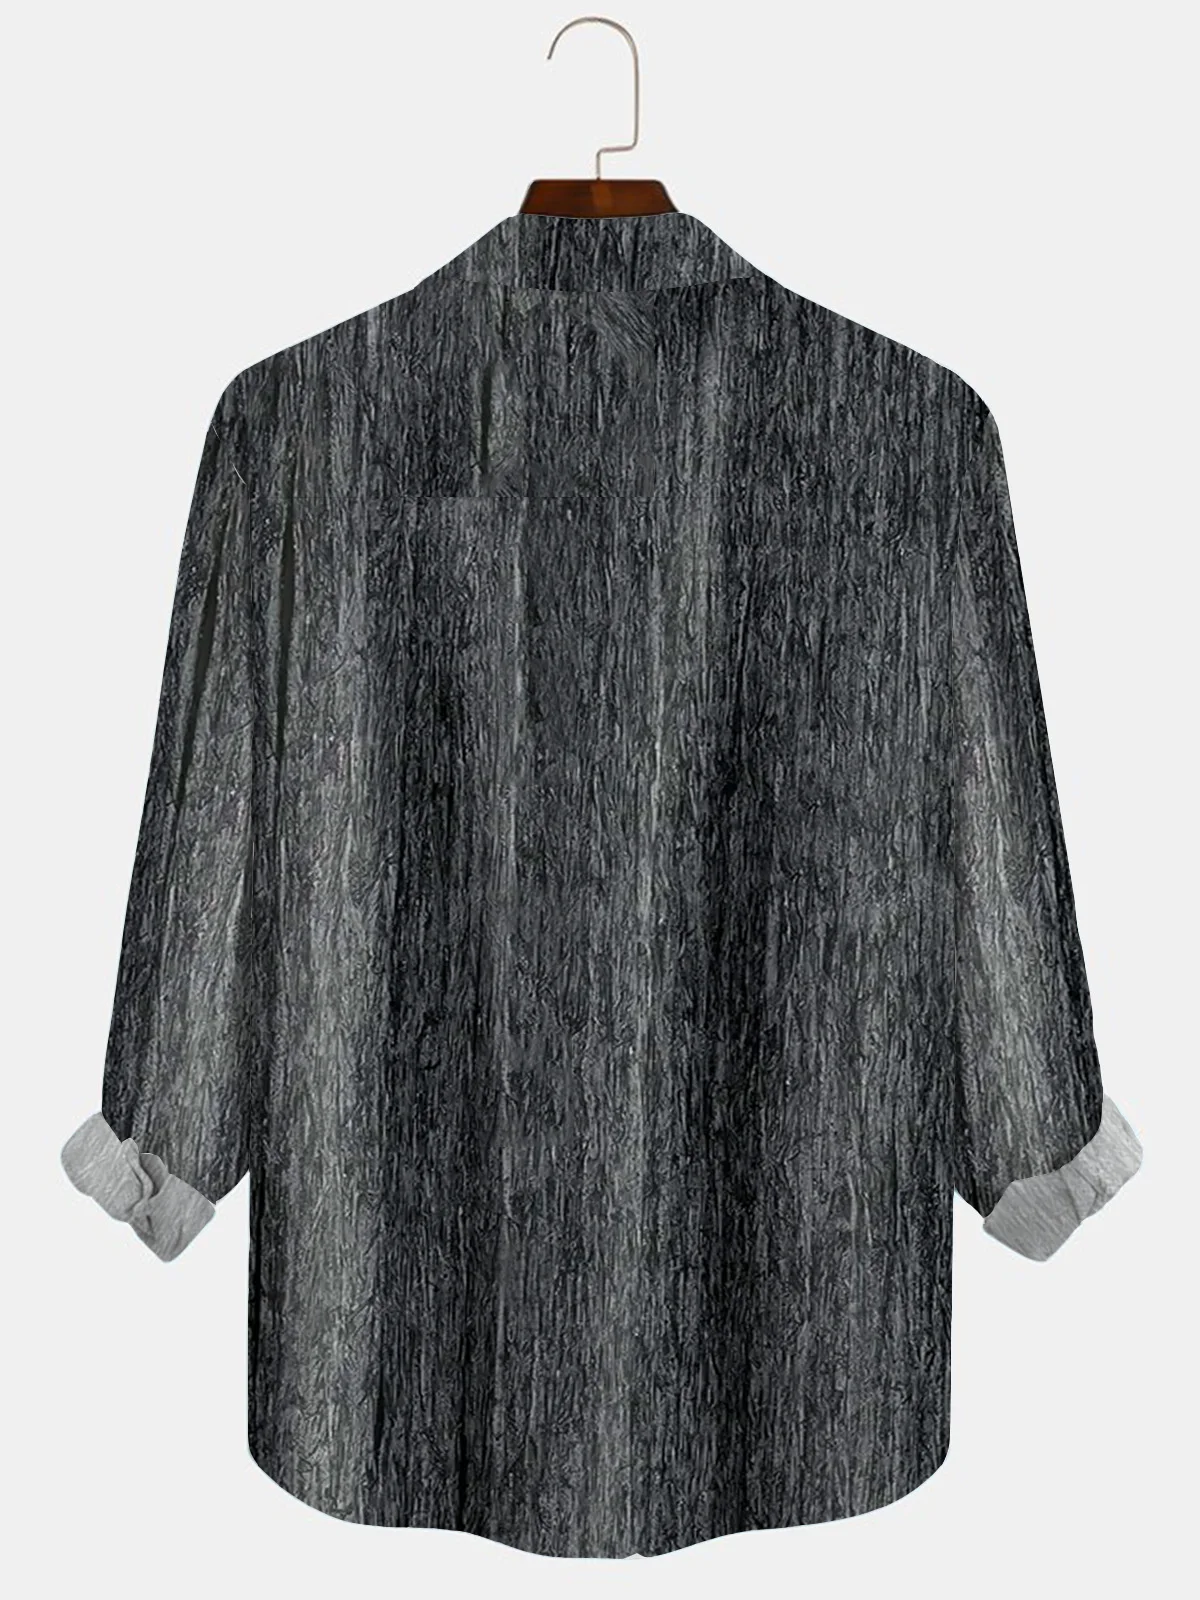 Royaura Vintage Basic Textured Print Men's Button Pocket Long Sleeve Shirt